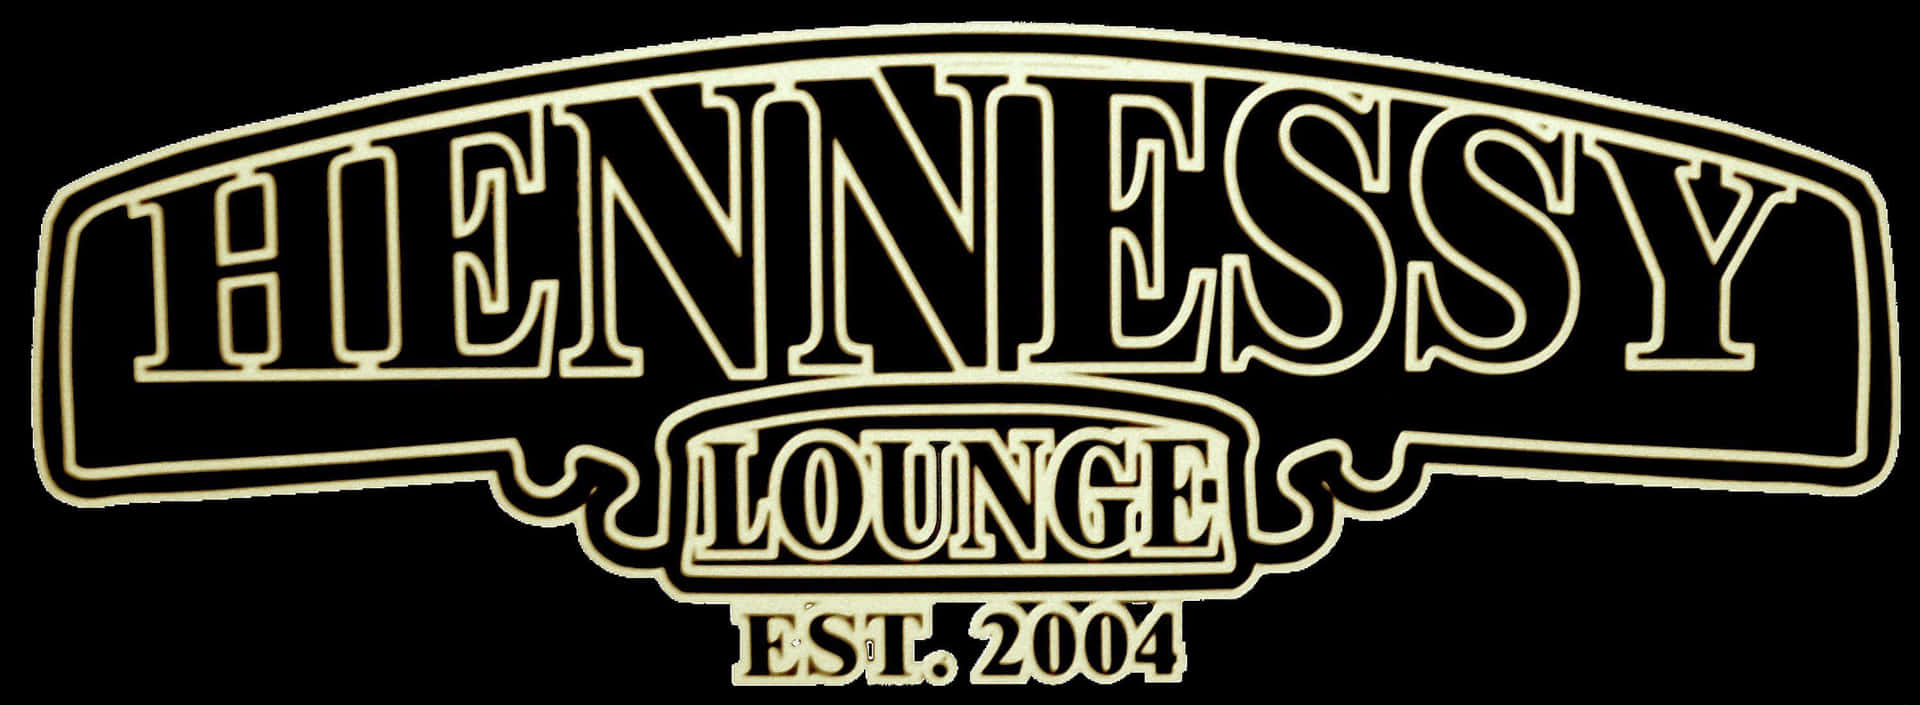 Hennessy Lounge Logo Wallpaper